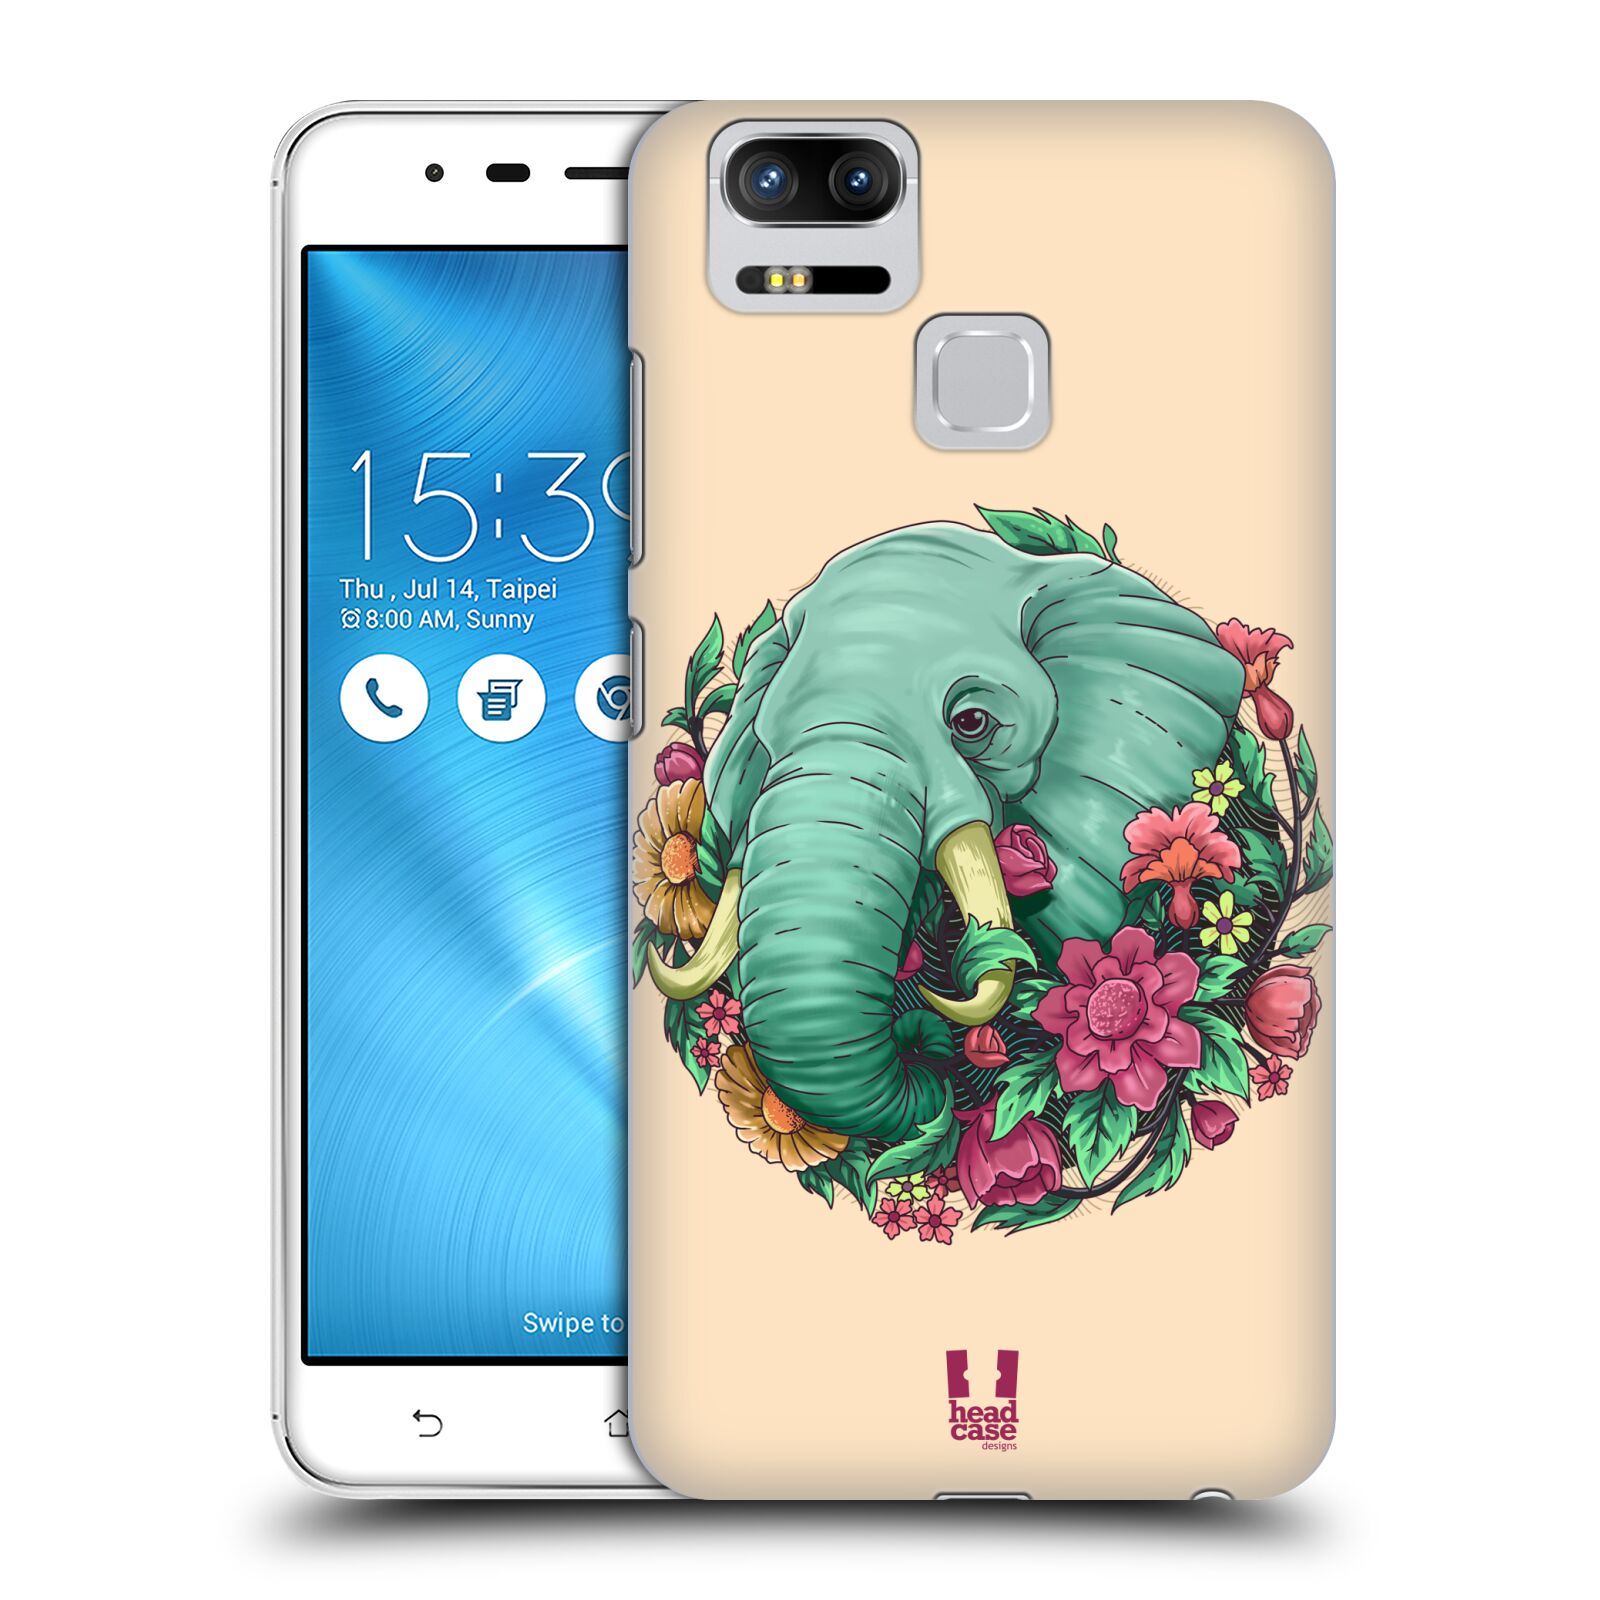 HEAD CASE plastový obal na mobil Asus Zenfone 3 Zoom ZE553KL vzor Flóra a Fauna slon